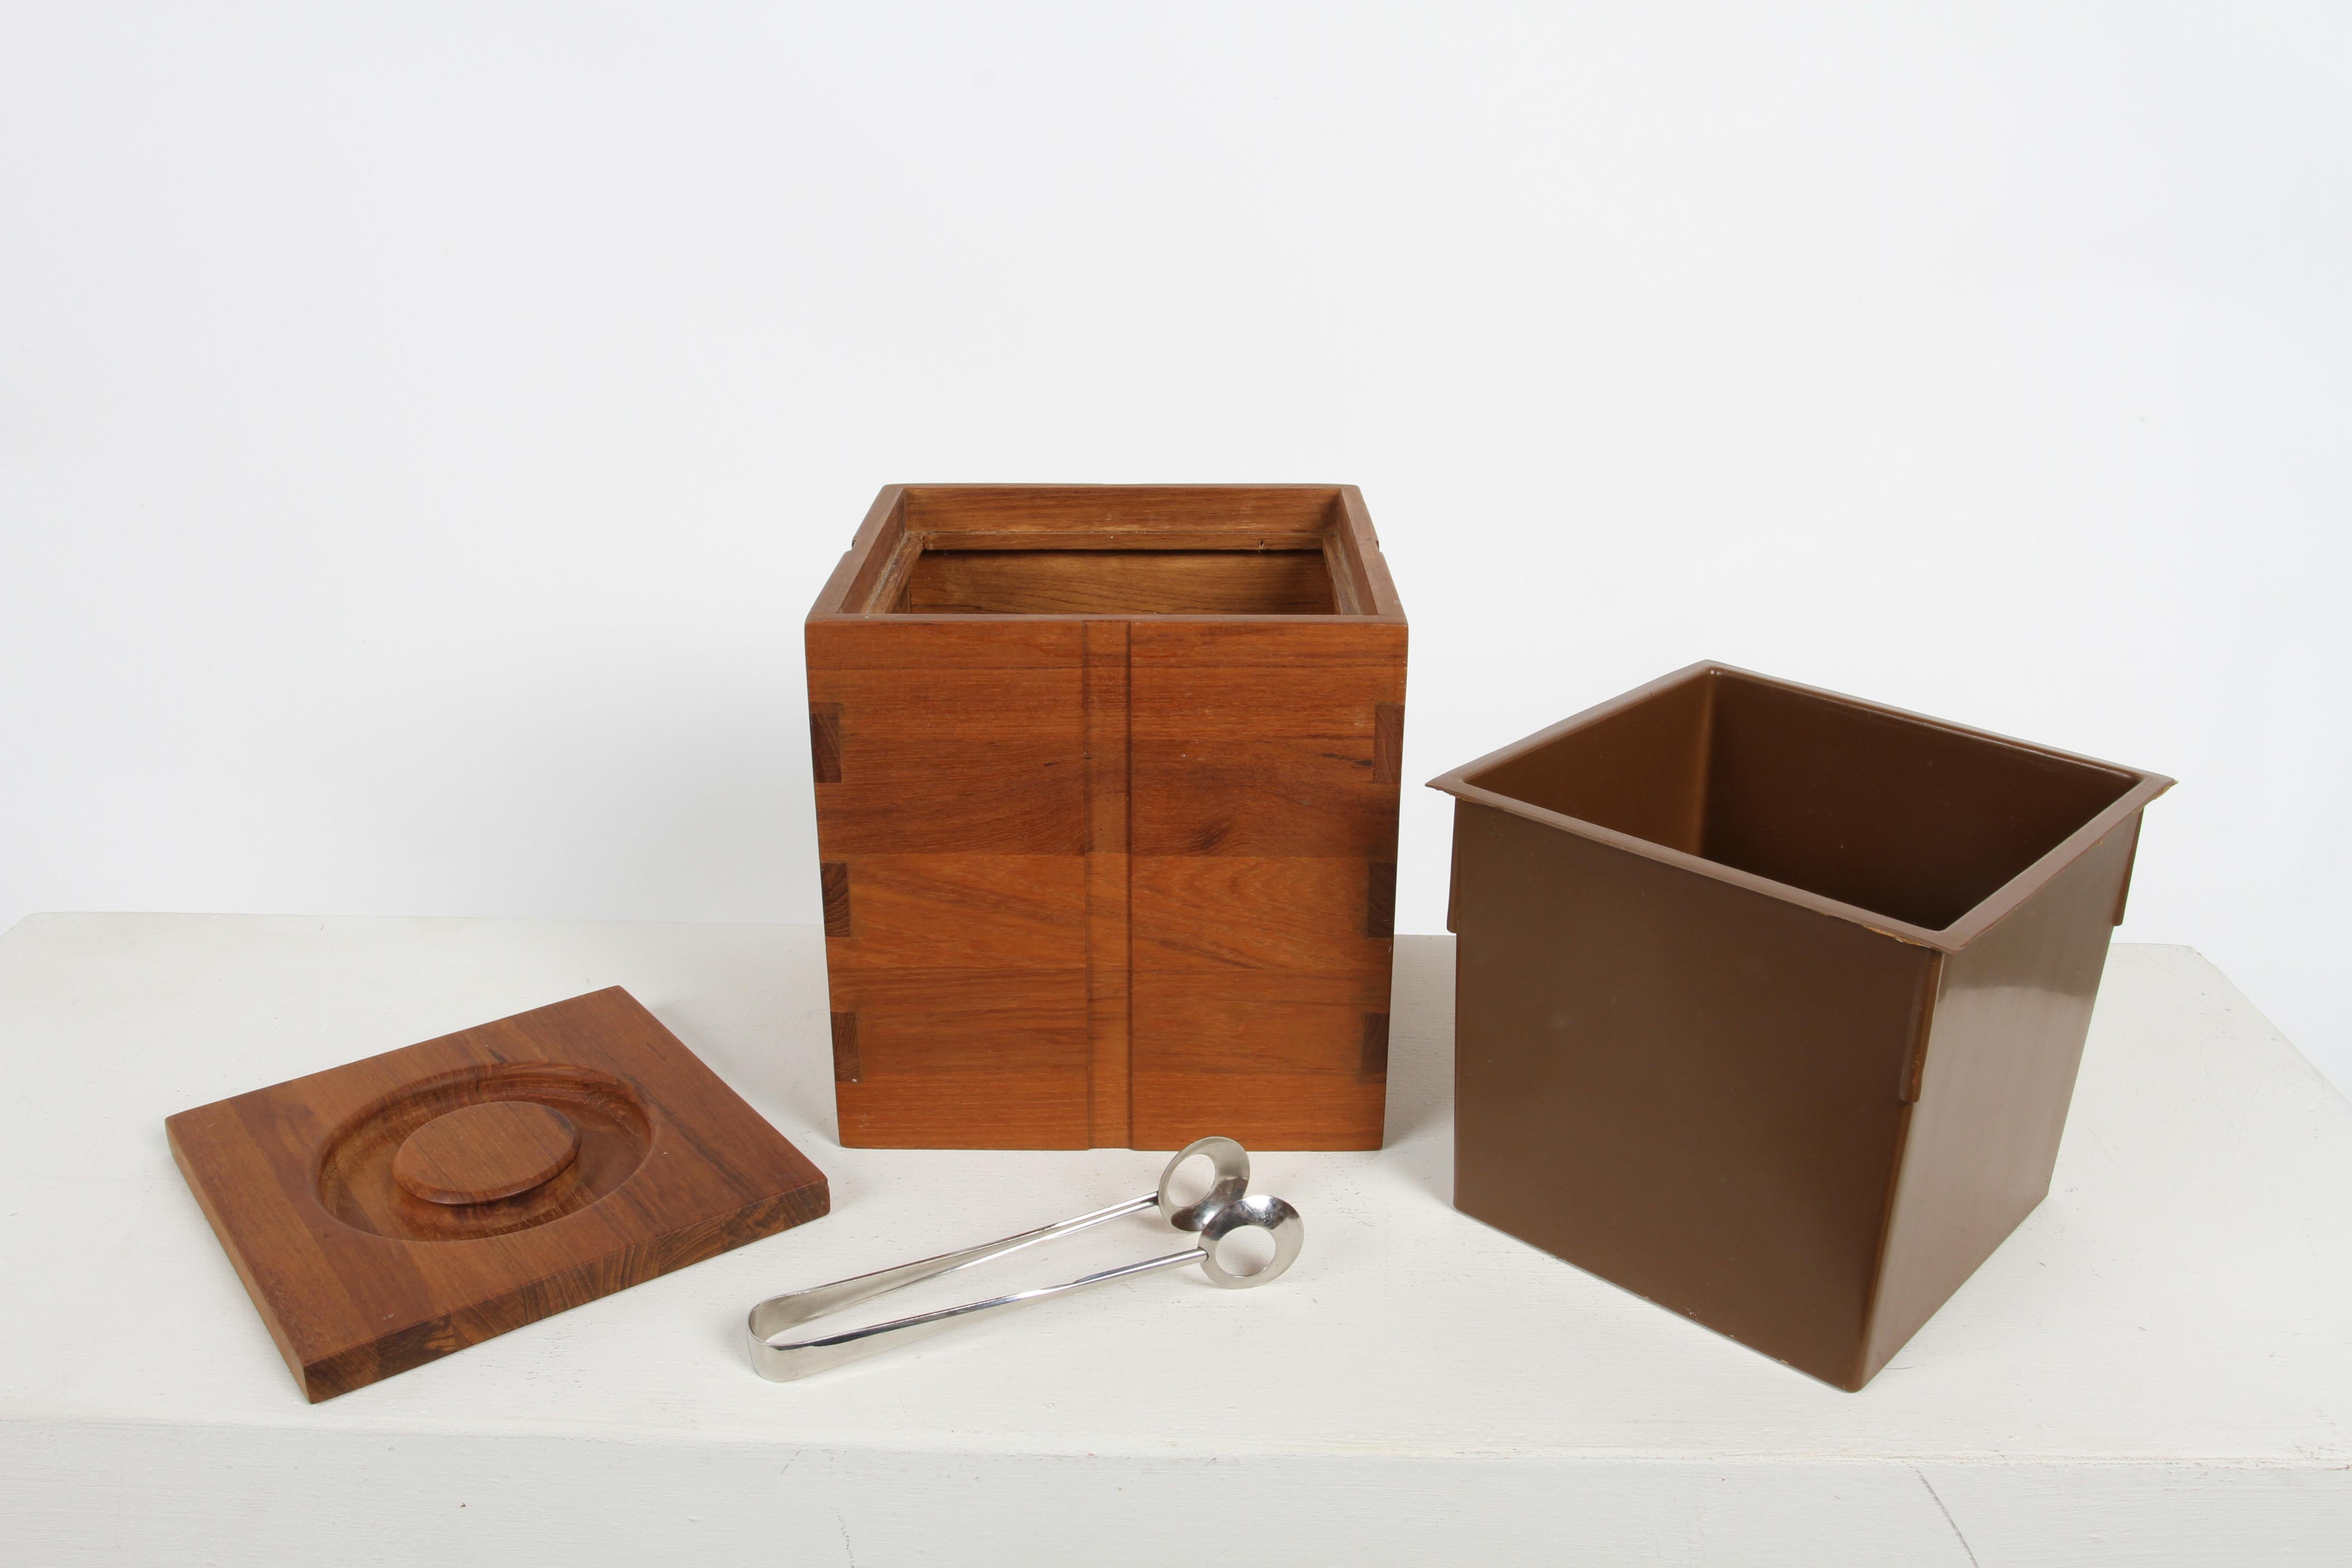 1970s Kalmar Designs Teak Wood Ice Bucket with Thongs - Danish Modern Style - For Sale 5